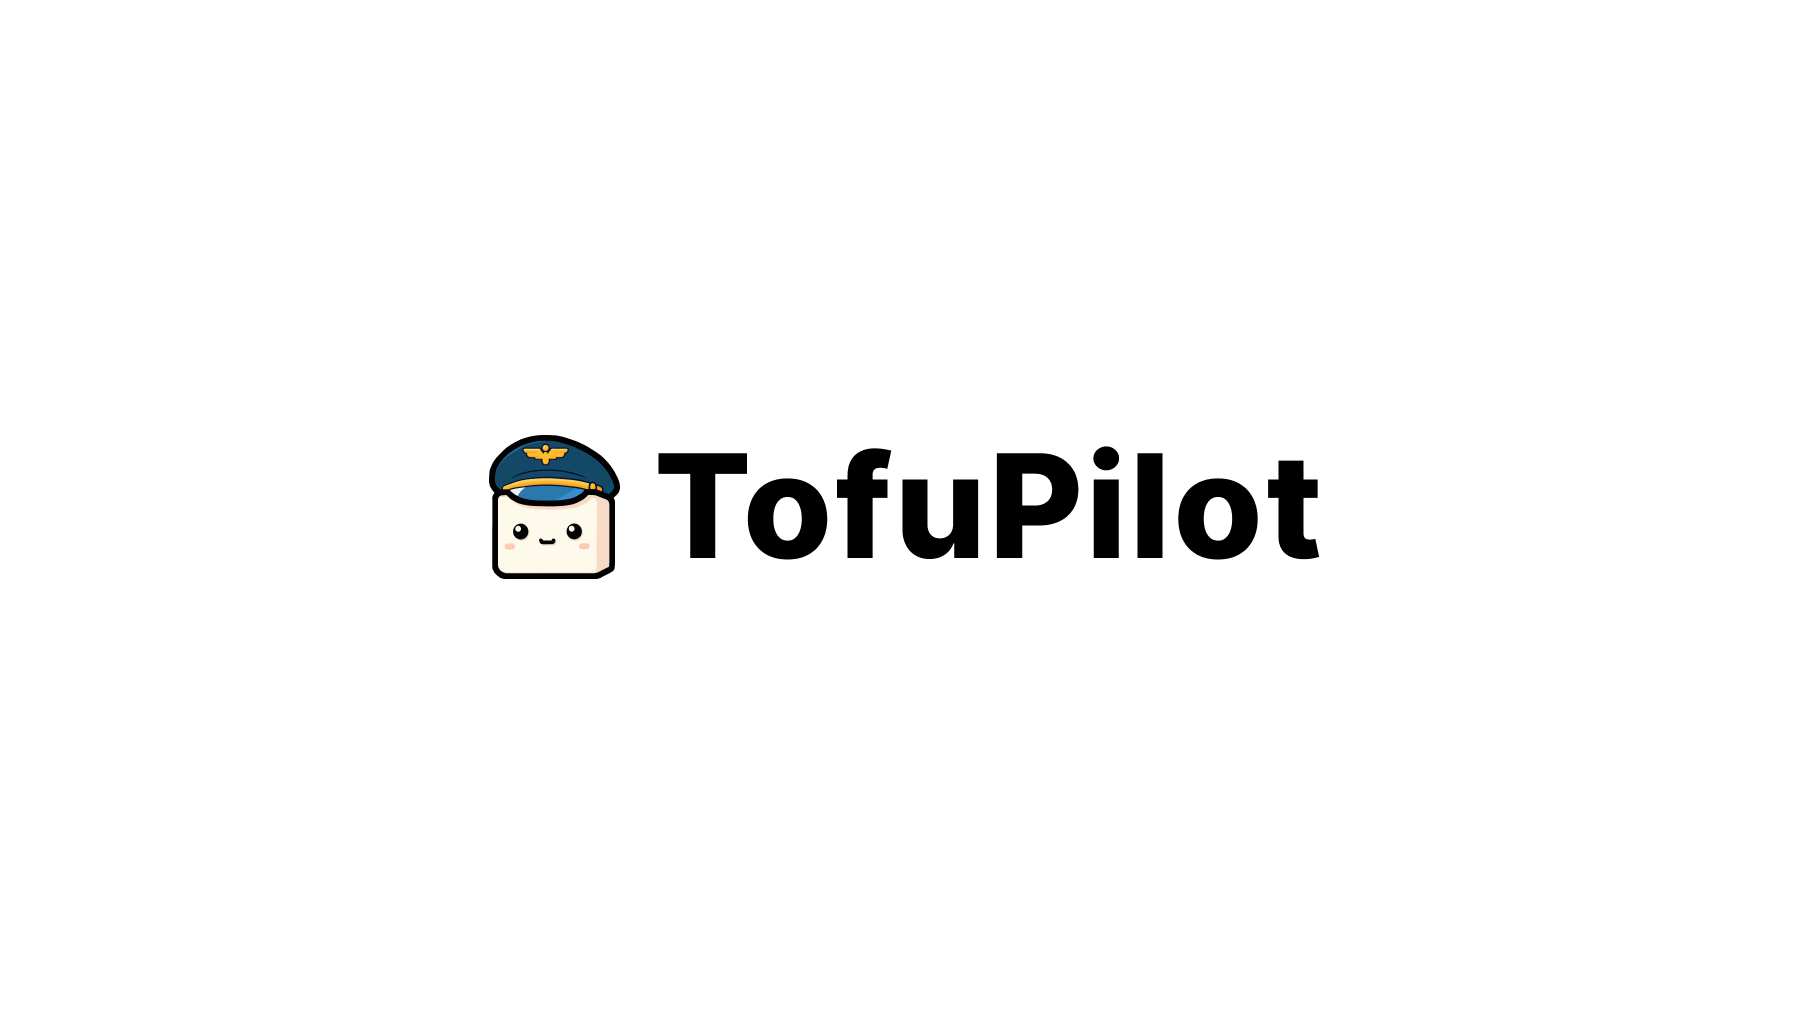 TofuPilot - Logo Reveal